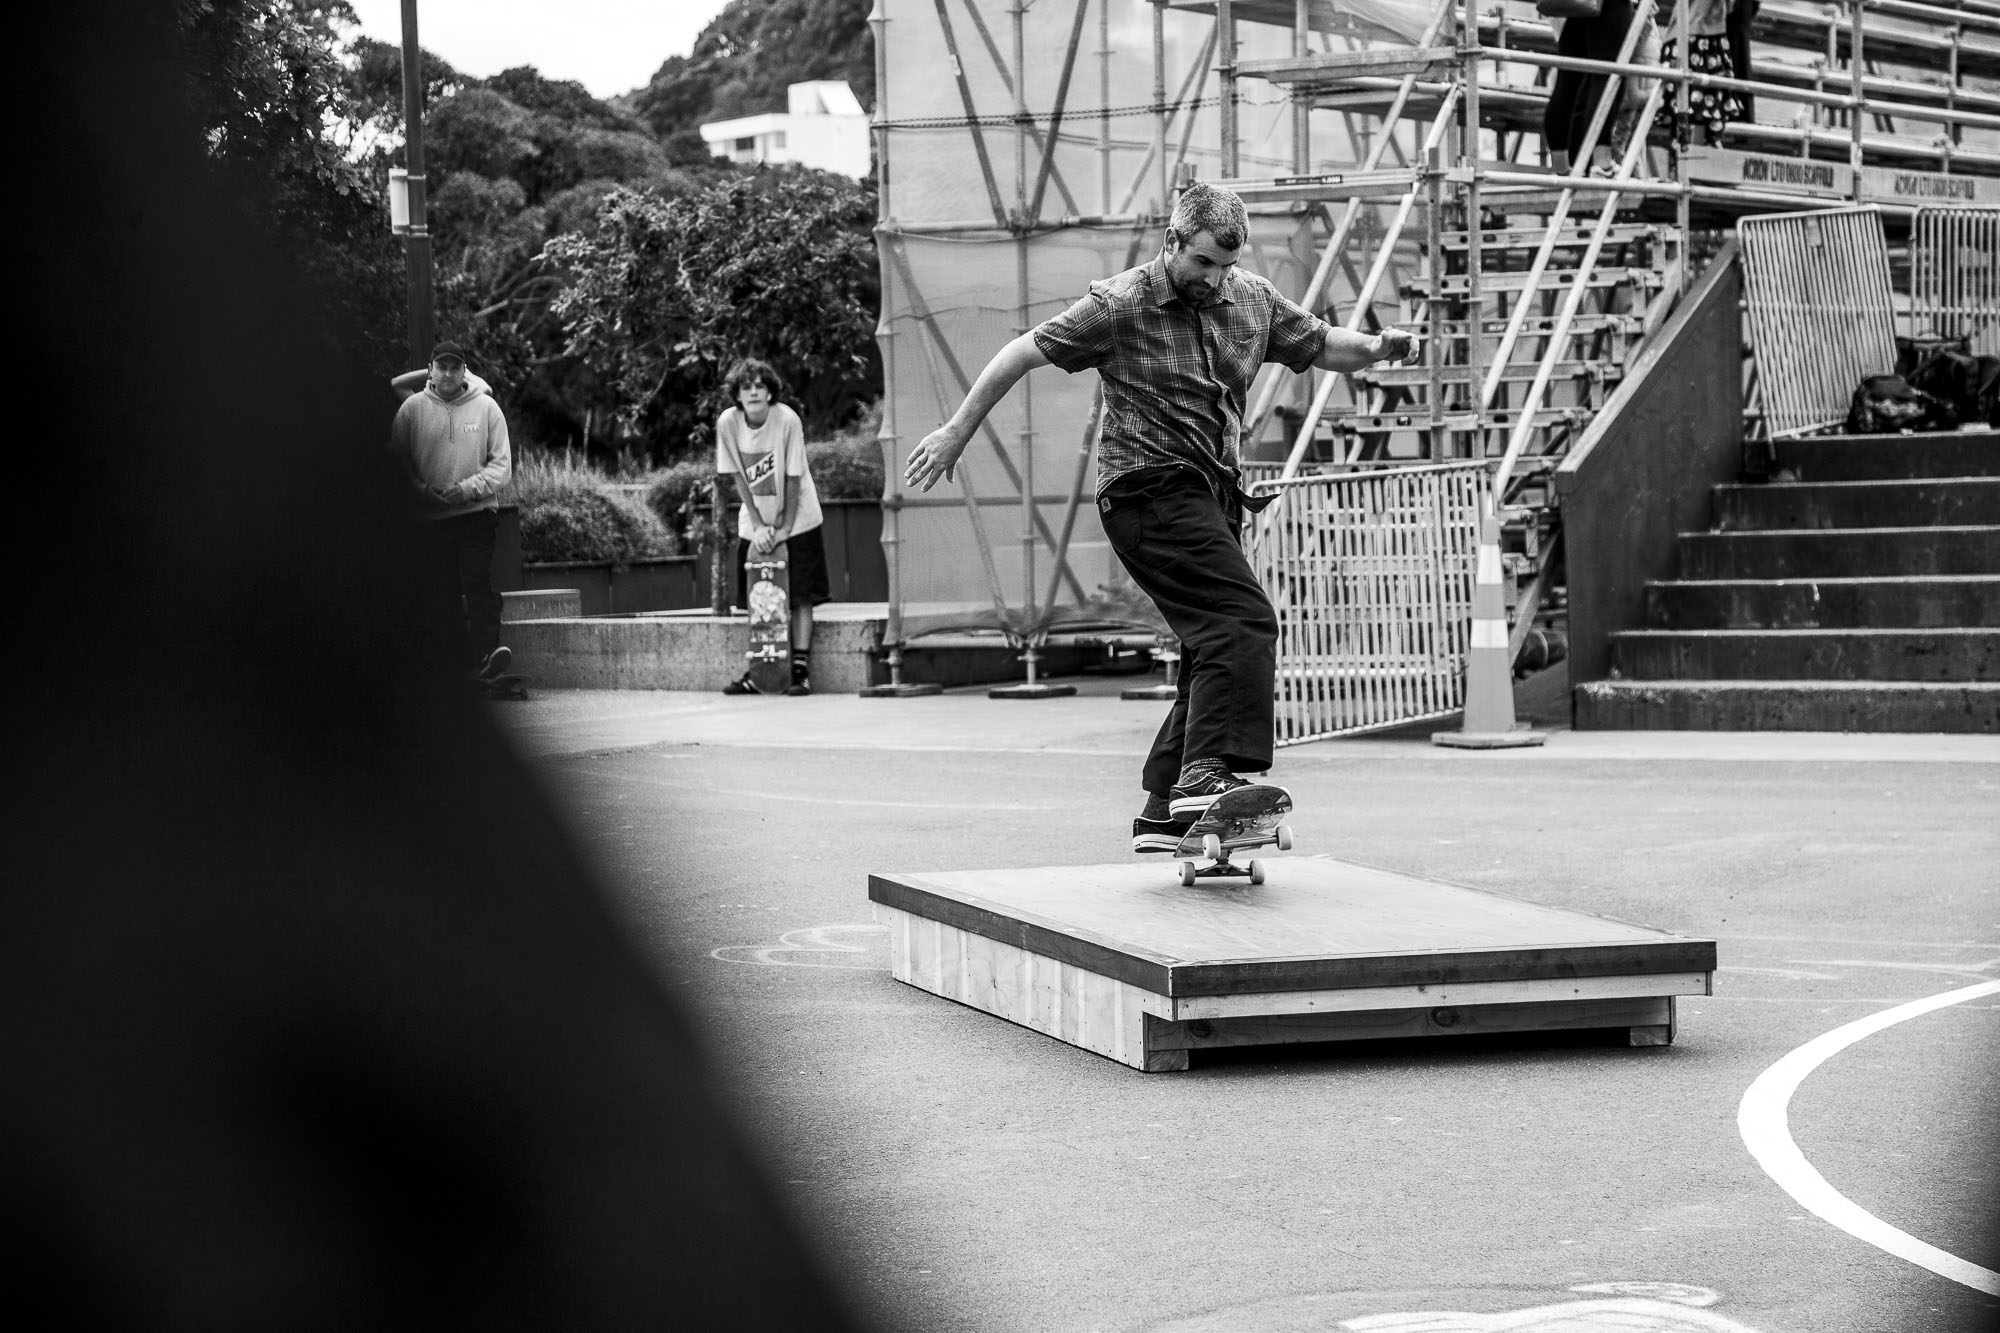 Skateboarding at the Manual Pad Jam event at Waitangi in October 2022 as part of Bowlzilla,